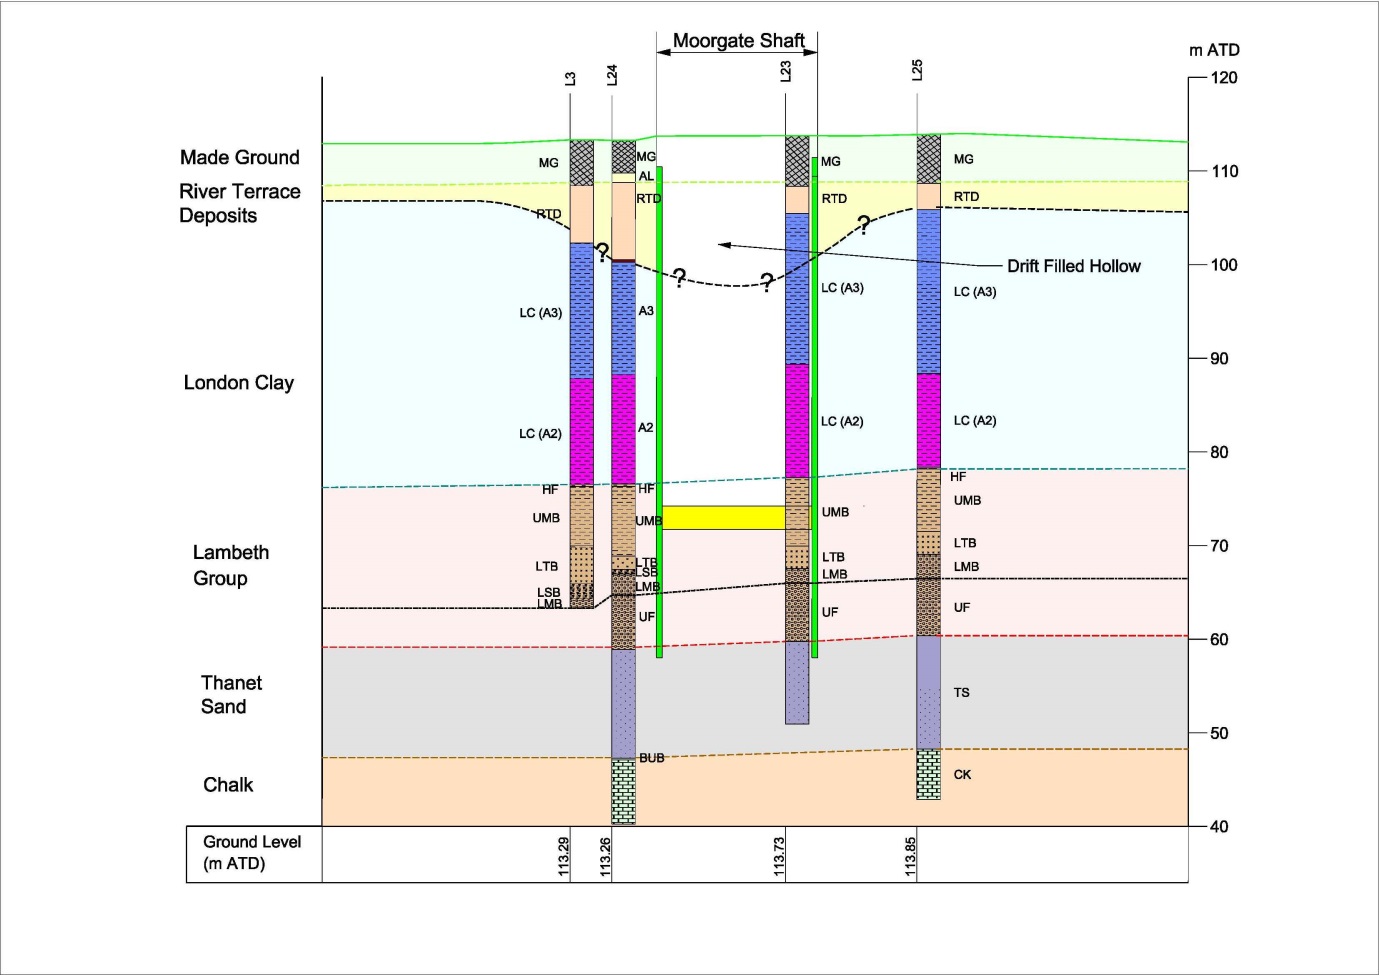 Figure 3 - Moorgate shaft geological section